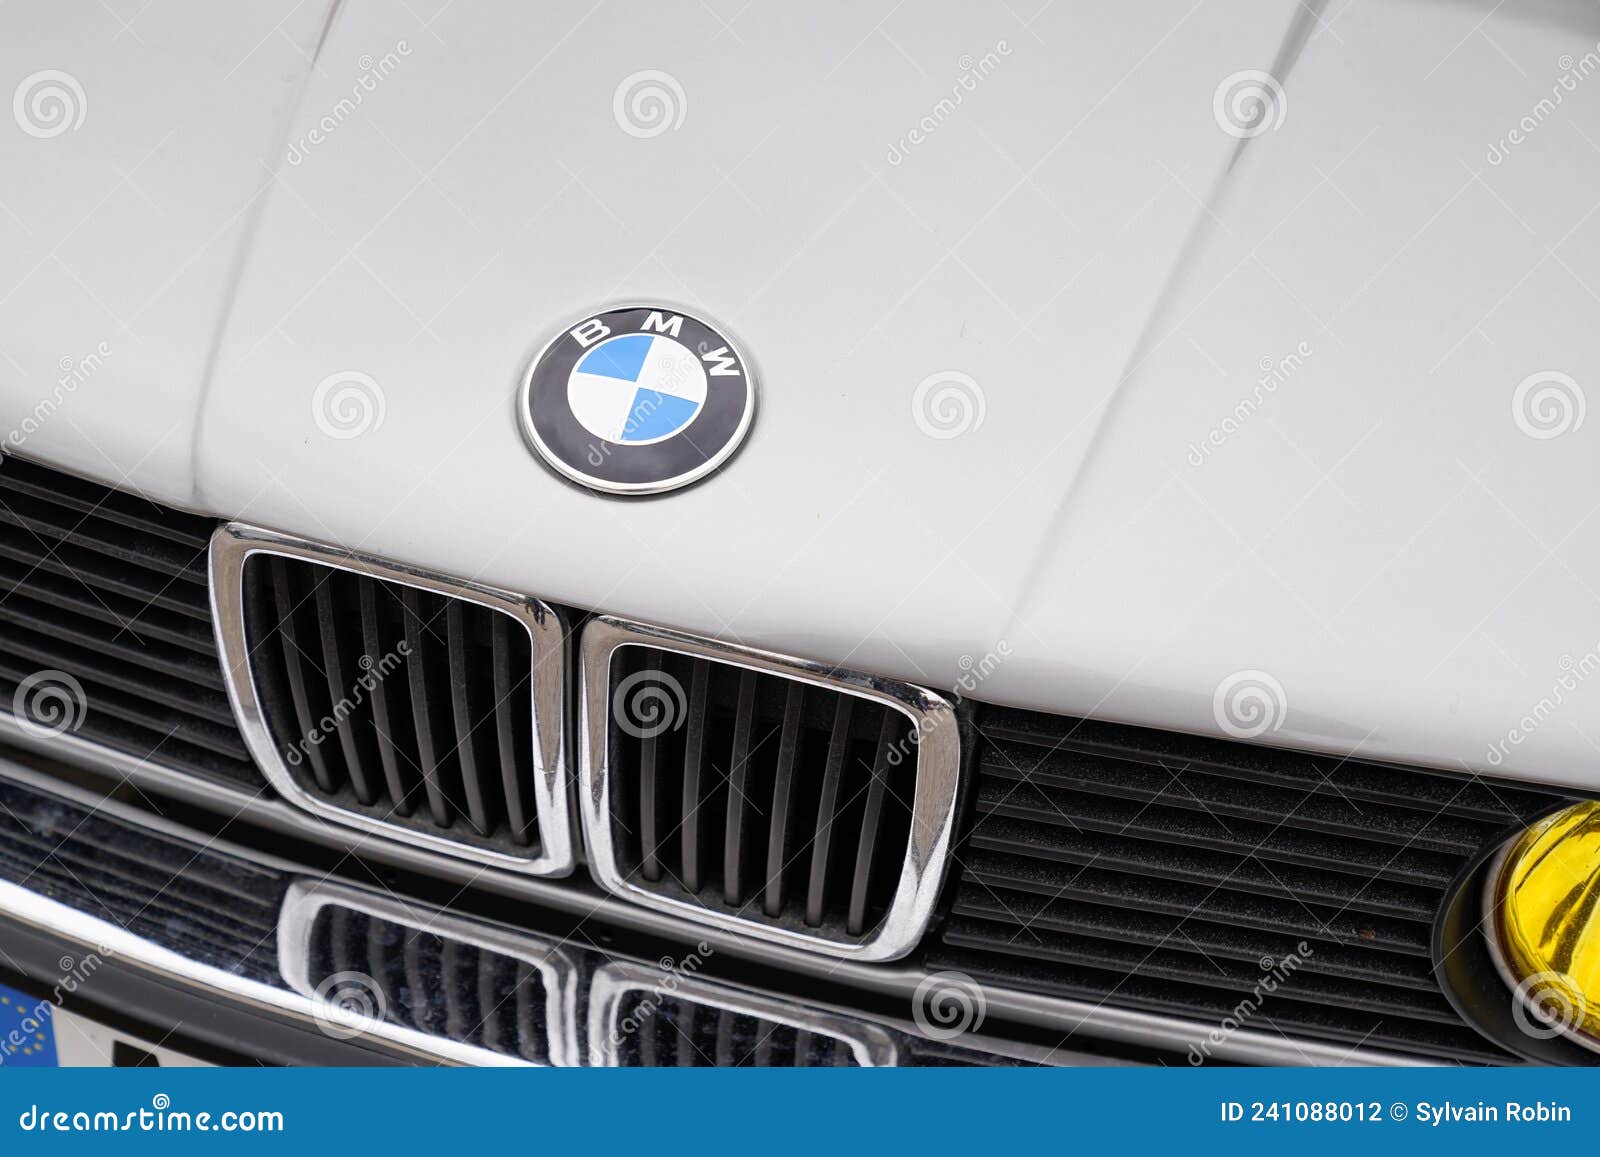 https://thumbs.dreamstime.com/z/bordeaux-aquitaine-france-bmw-logo-brand-text-logo-sign-old-timer-vintage-retro-front-car-hood-face-bordeaux-aquitaine-241088012.jpg